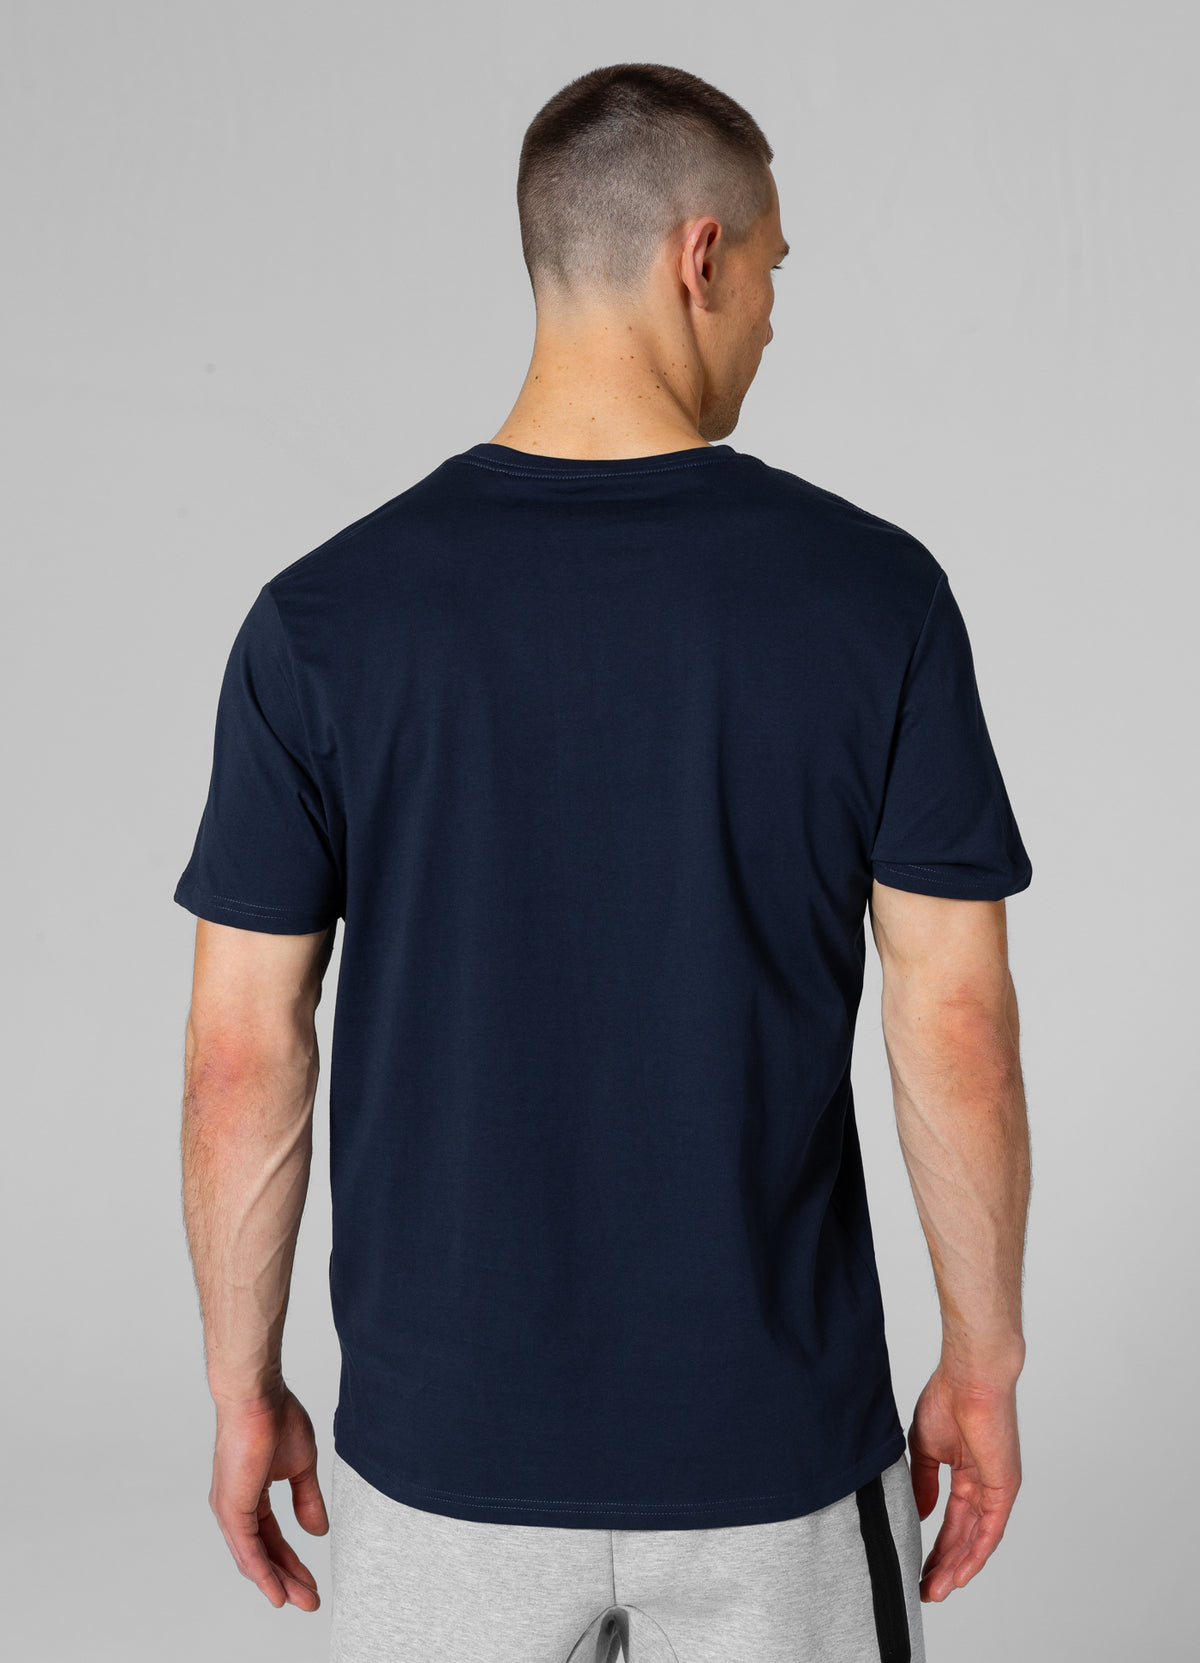 SMALL LOGO Lightweight Dark Navy T-shirt